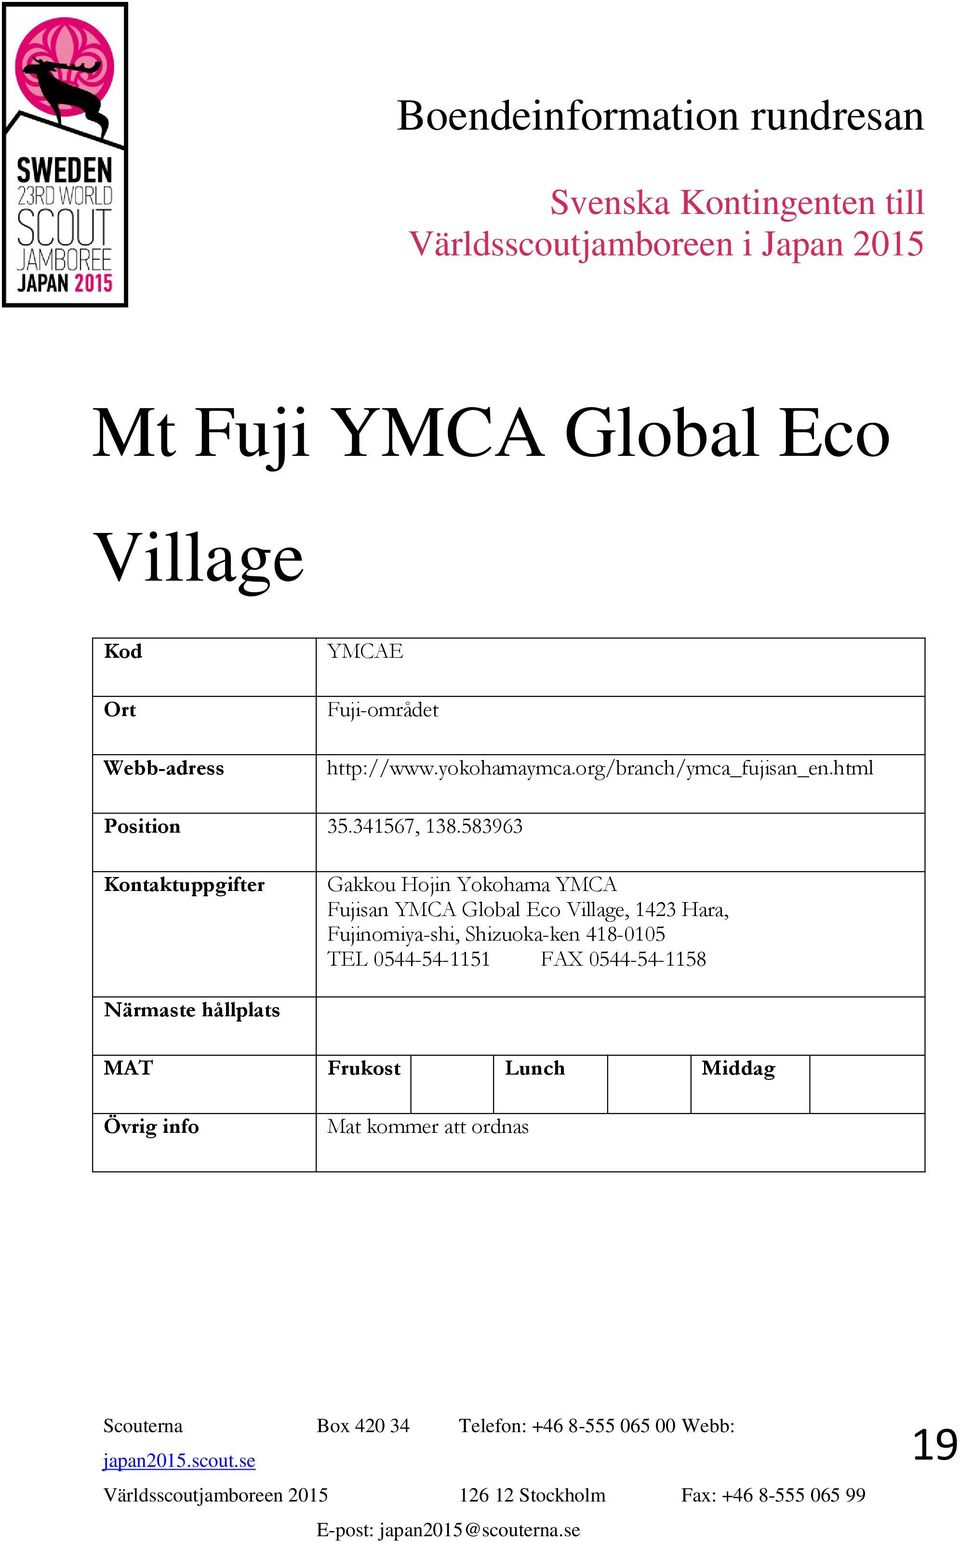 583963 Gakkou Hojin Yokohama YMCA Fujisan YMCA Global Eco Village, 1423 Hara,